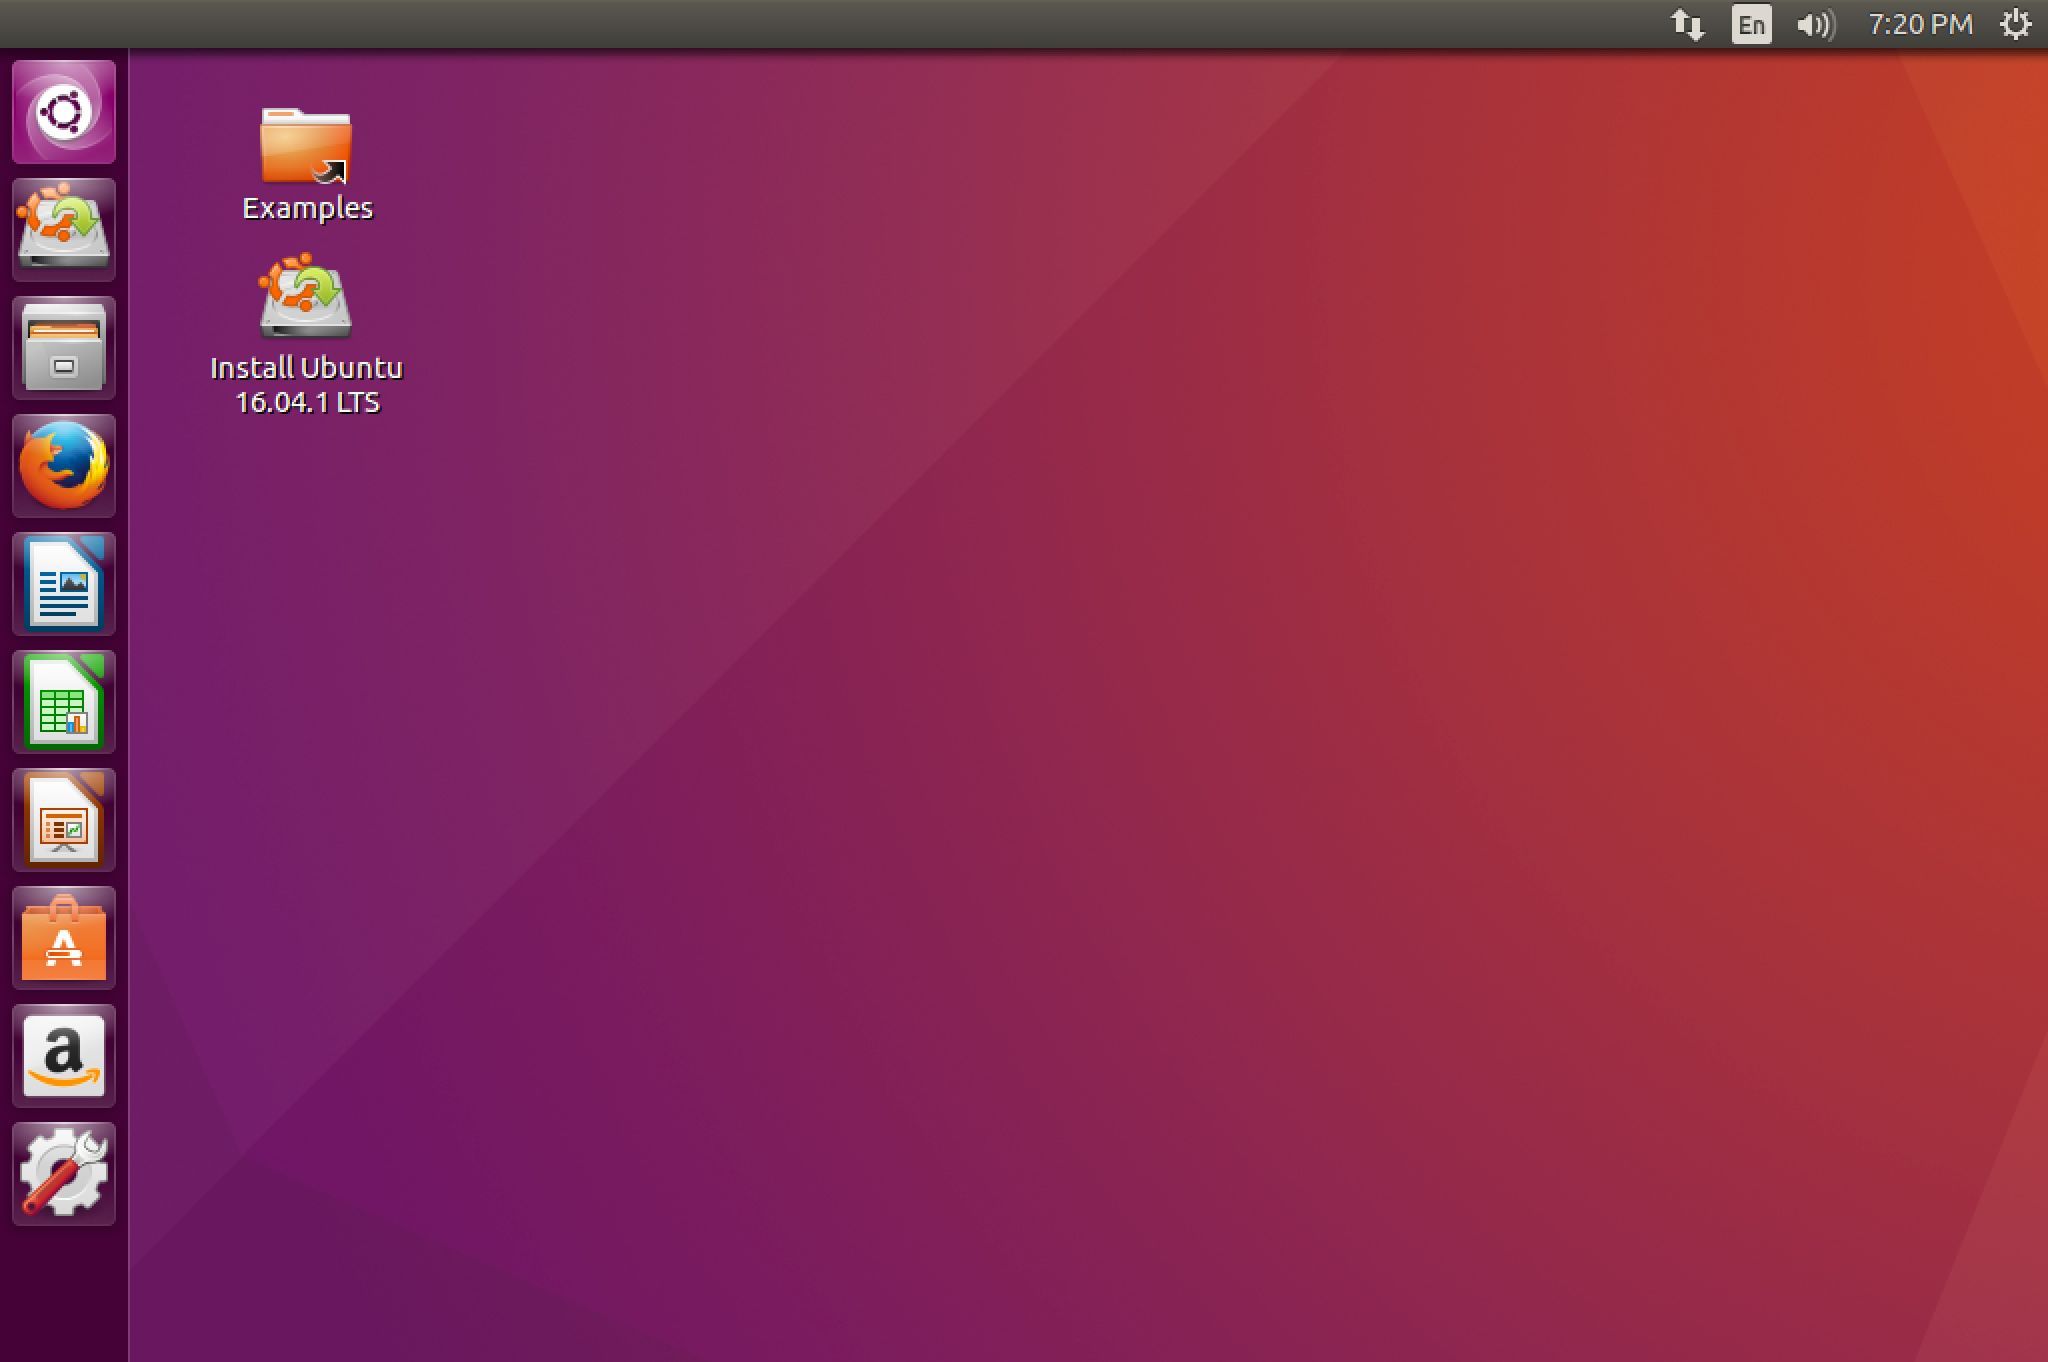 Live Ubuntu Desktop